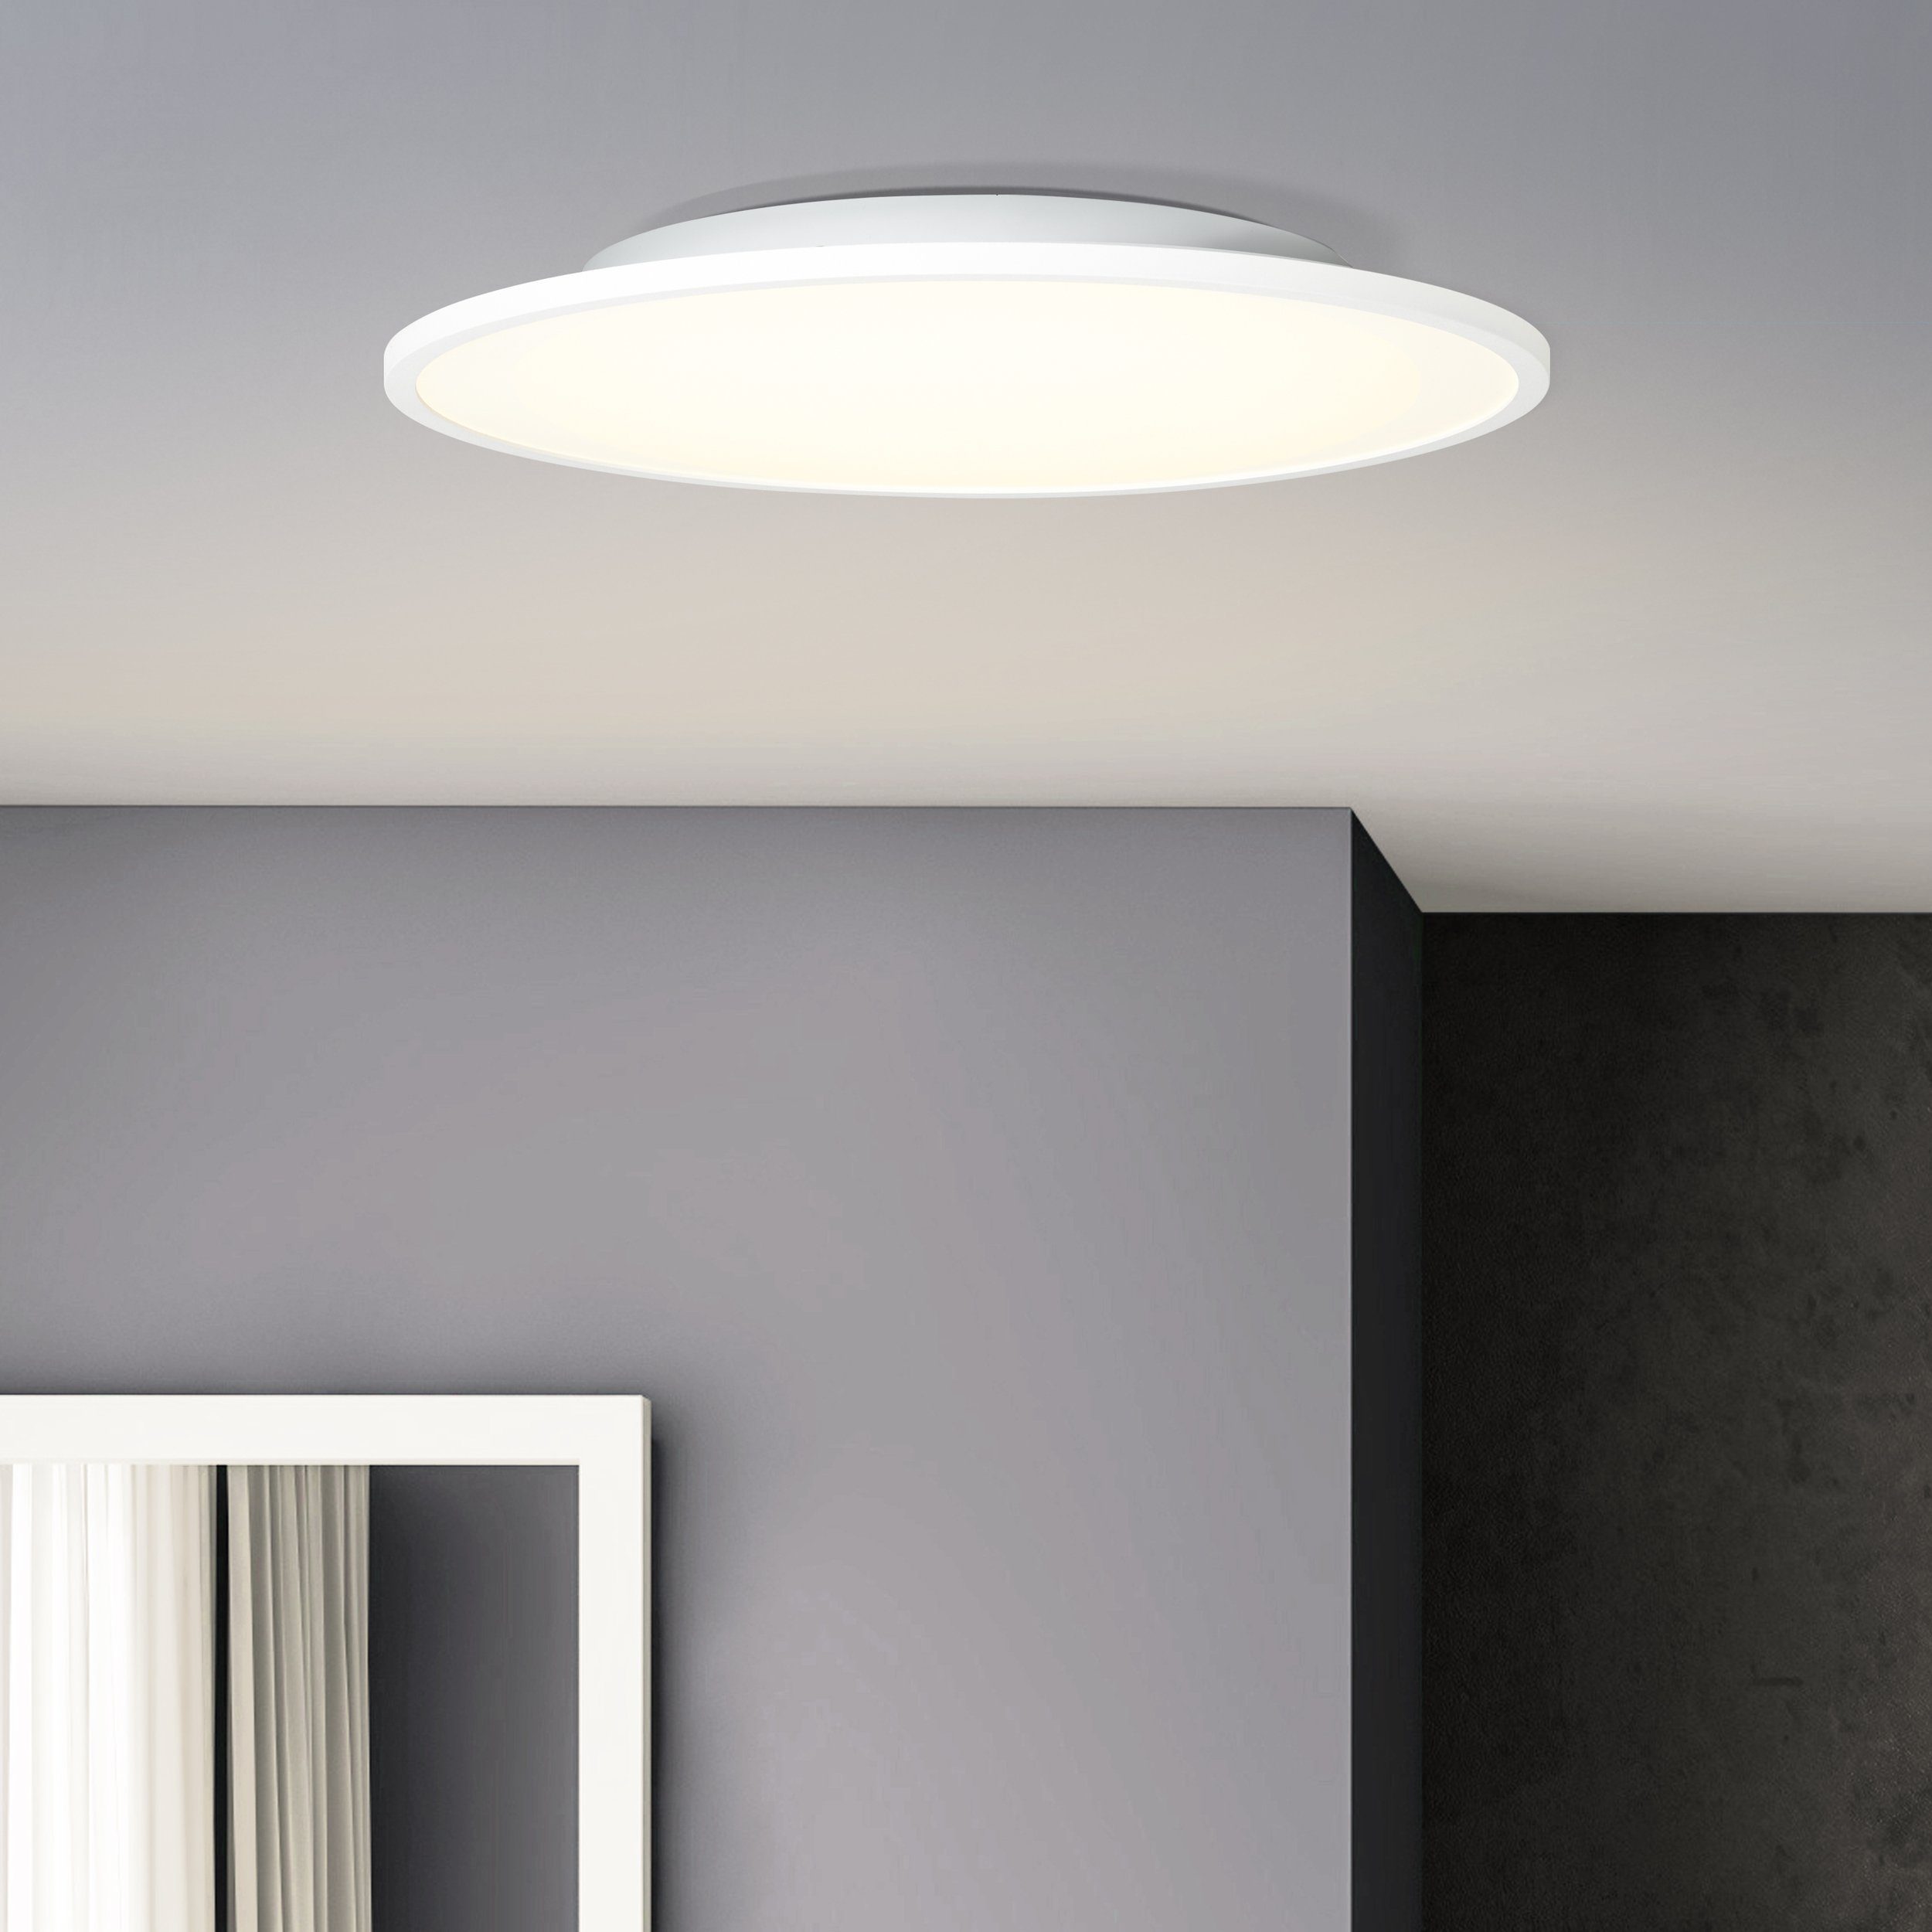 Lightbox LED Deckenleuchte, LED fest integriert, warmweiß, LED Aufbaupaneel, Ø 45 cm, 32 W, 3200 lm, 2700 K, Metall/Kunststoff